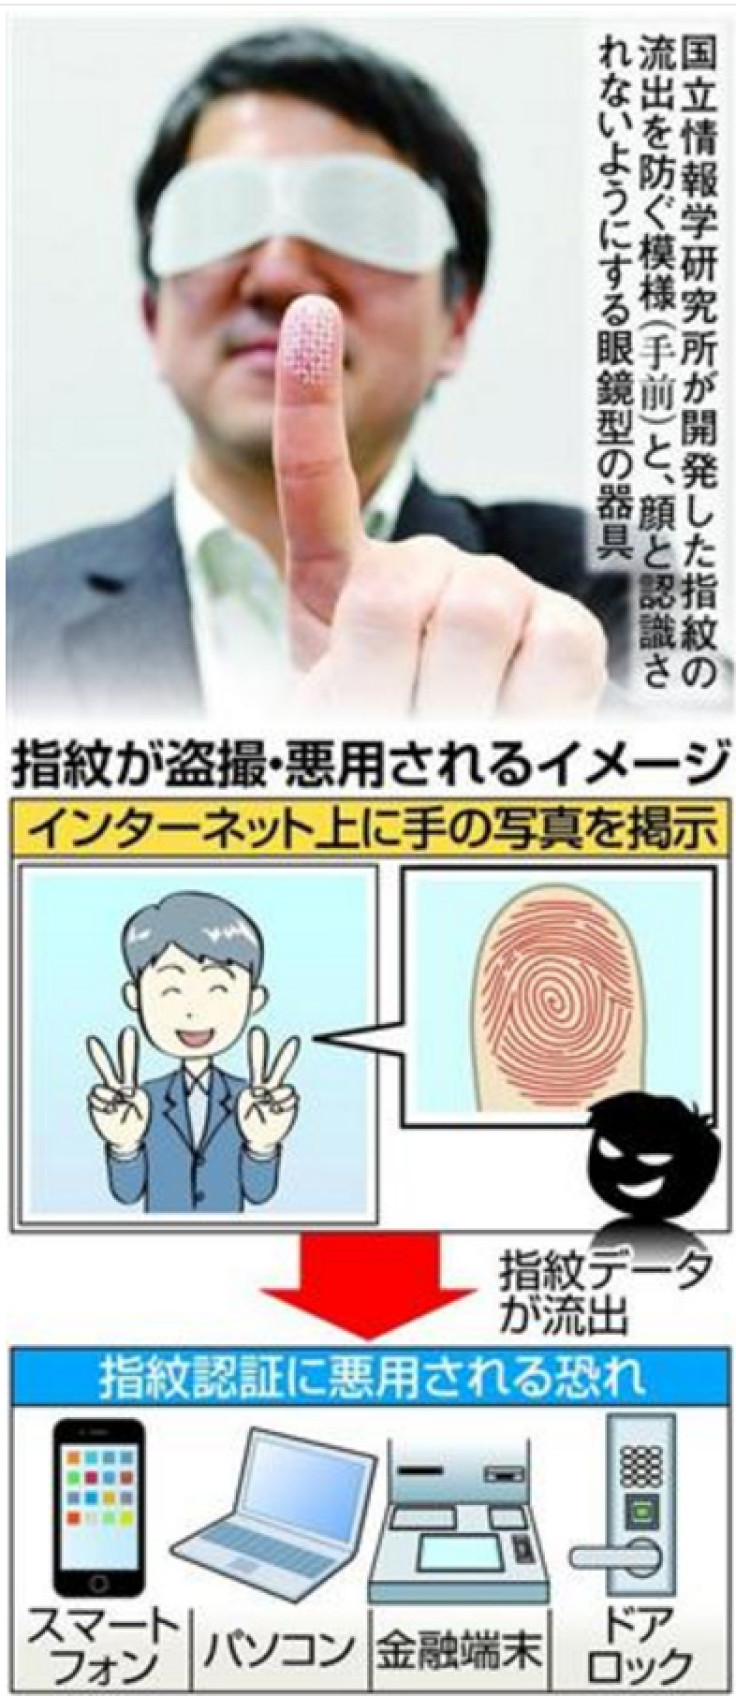 National Institute of Informatics' anti-fingerprint theft solution